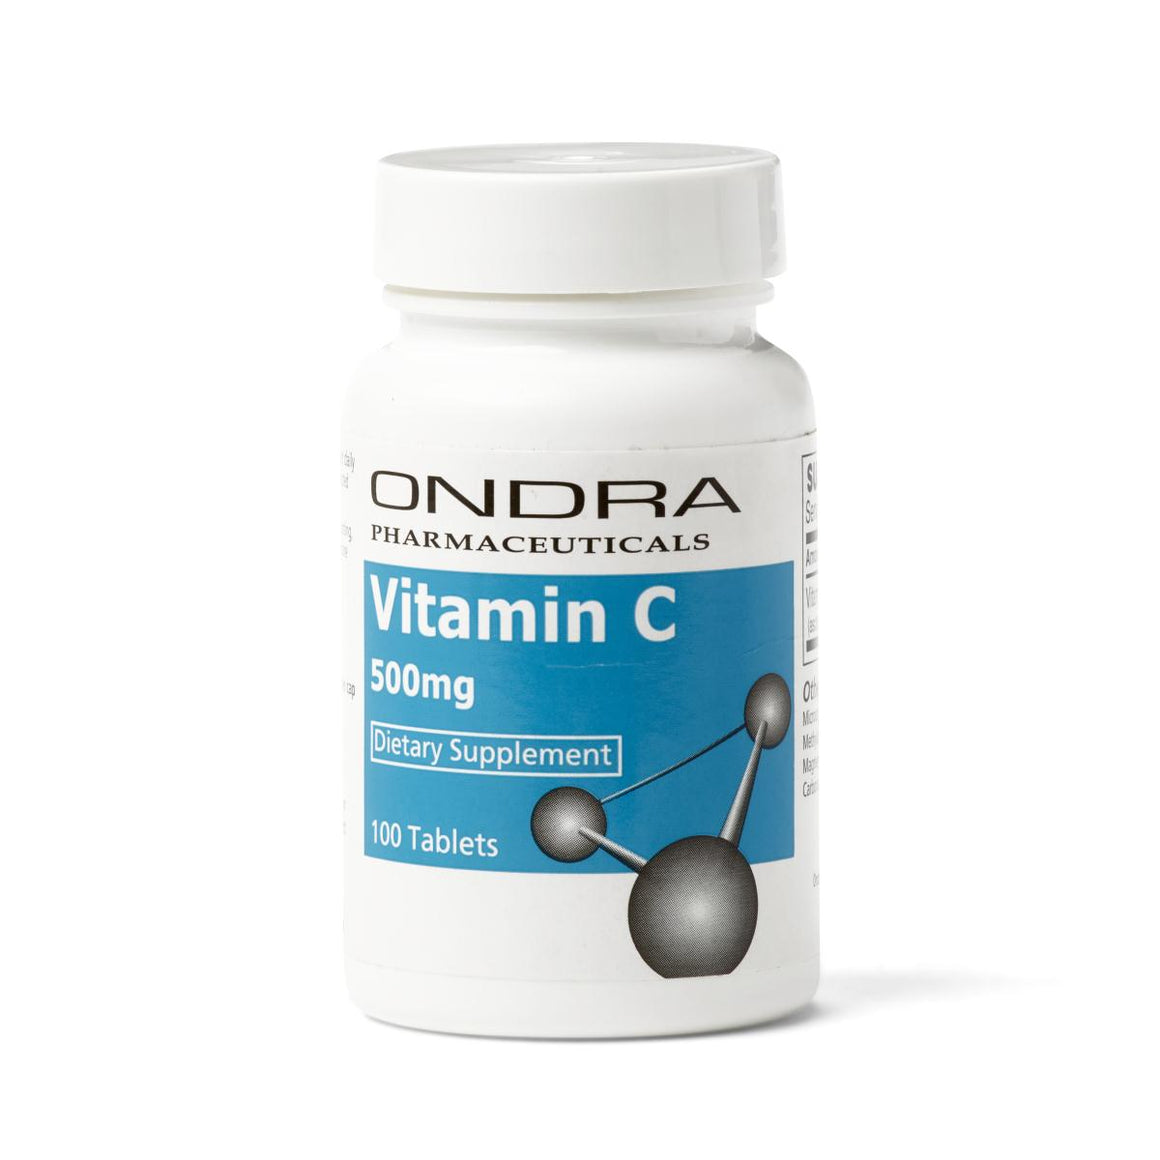 Vitamin C Tablets, Each